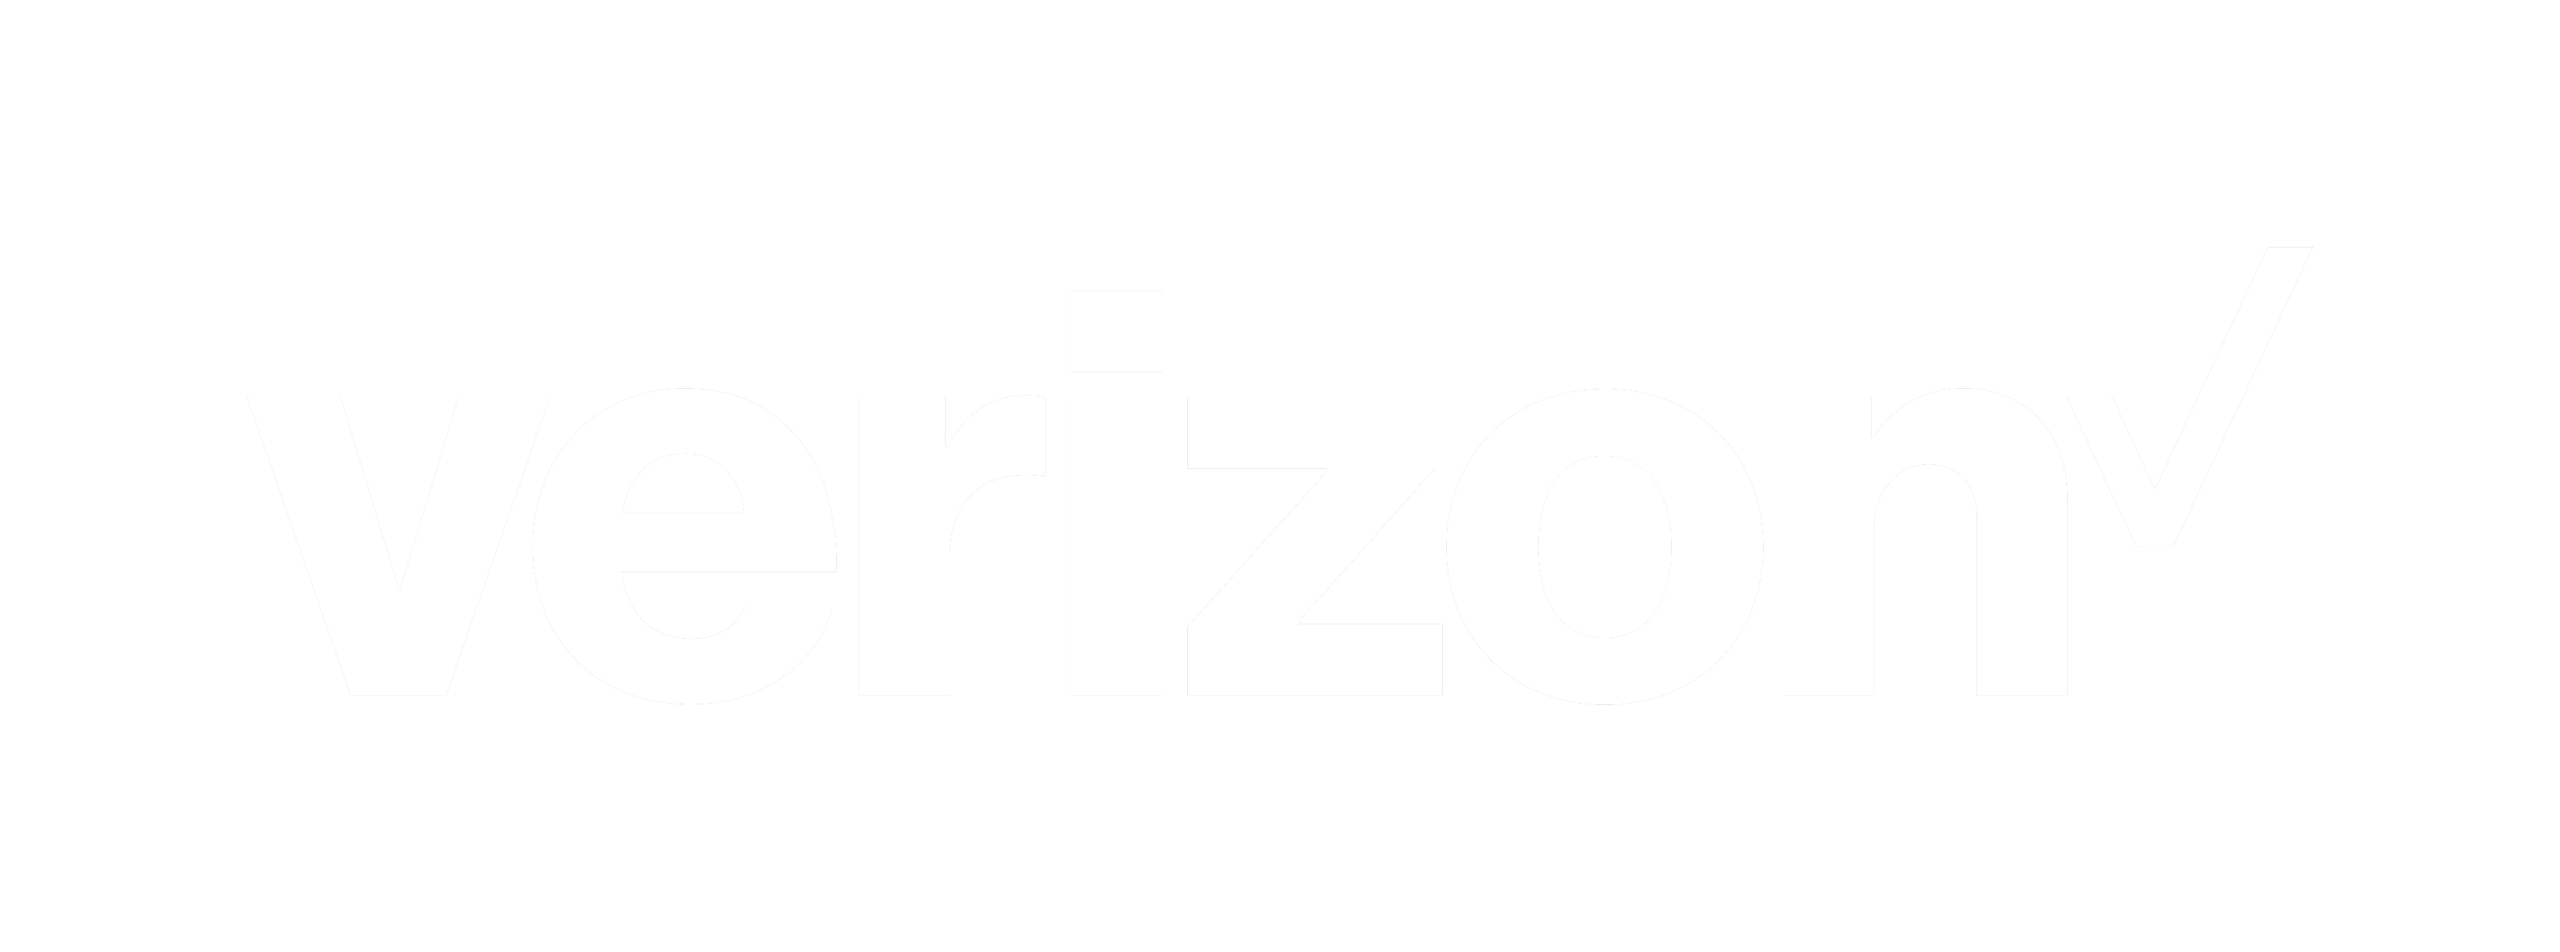 Image of Verizon logo